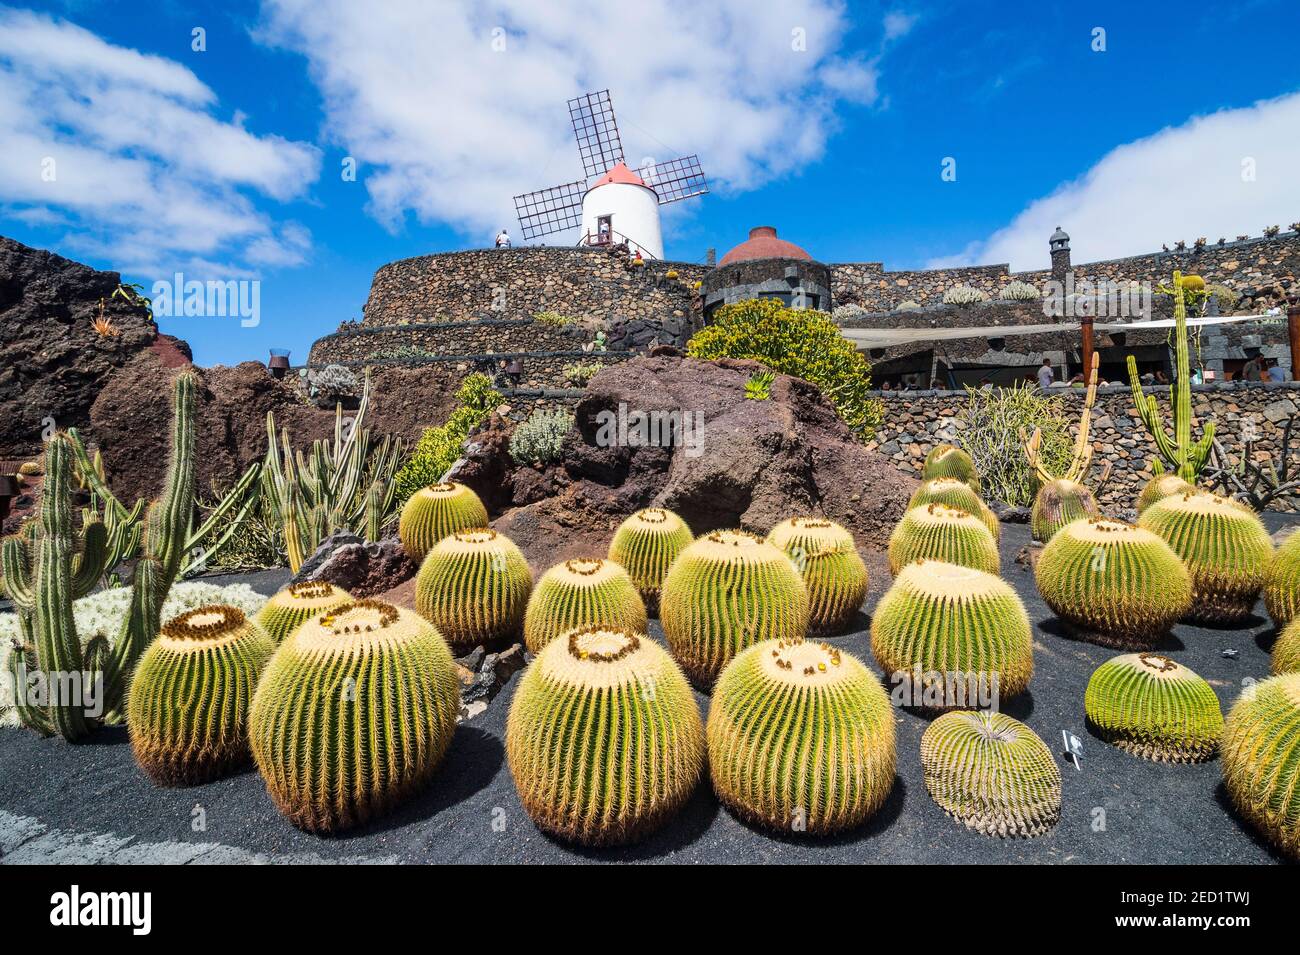 Jardin de Cactus, jardin de cactus Cesar Manrique, Lanzarote, îles Canaries Banque D'Images